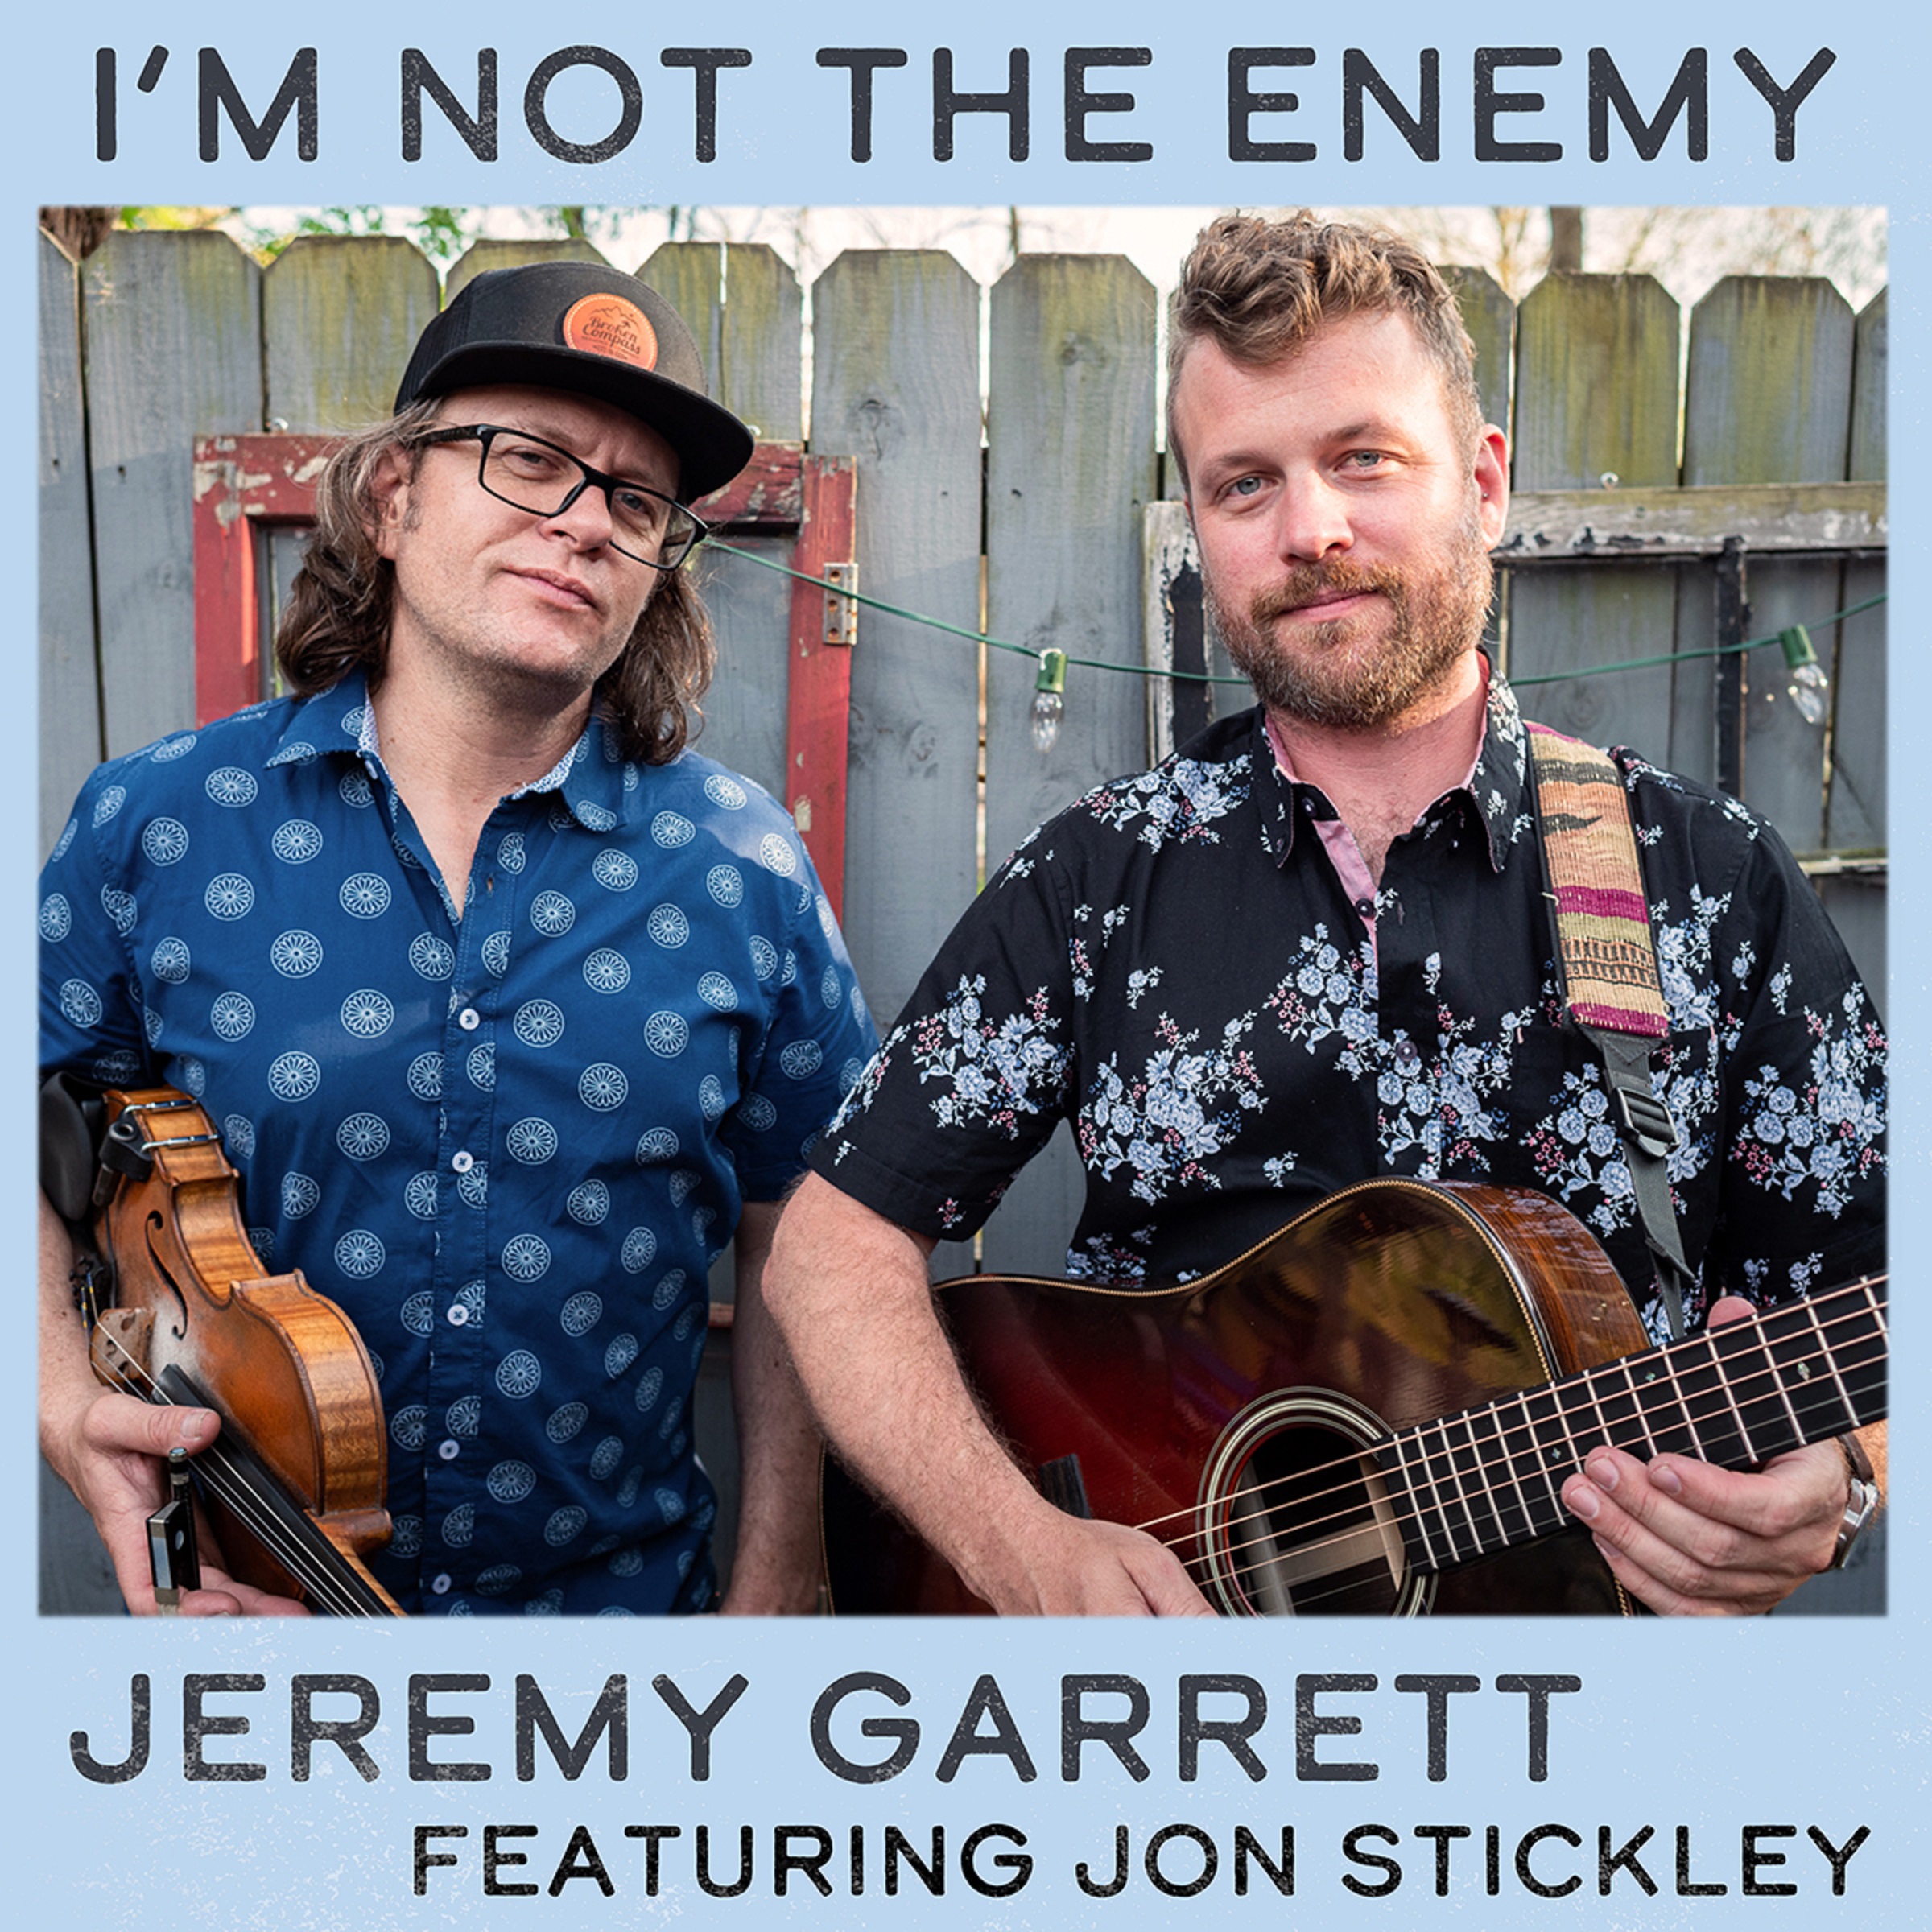 Jeremy Garrett and Jon Stickley bring explosive energy to “I’m Not The Enemy”